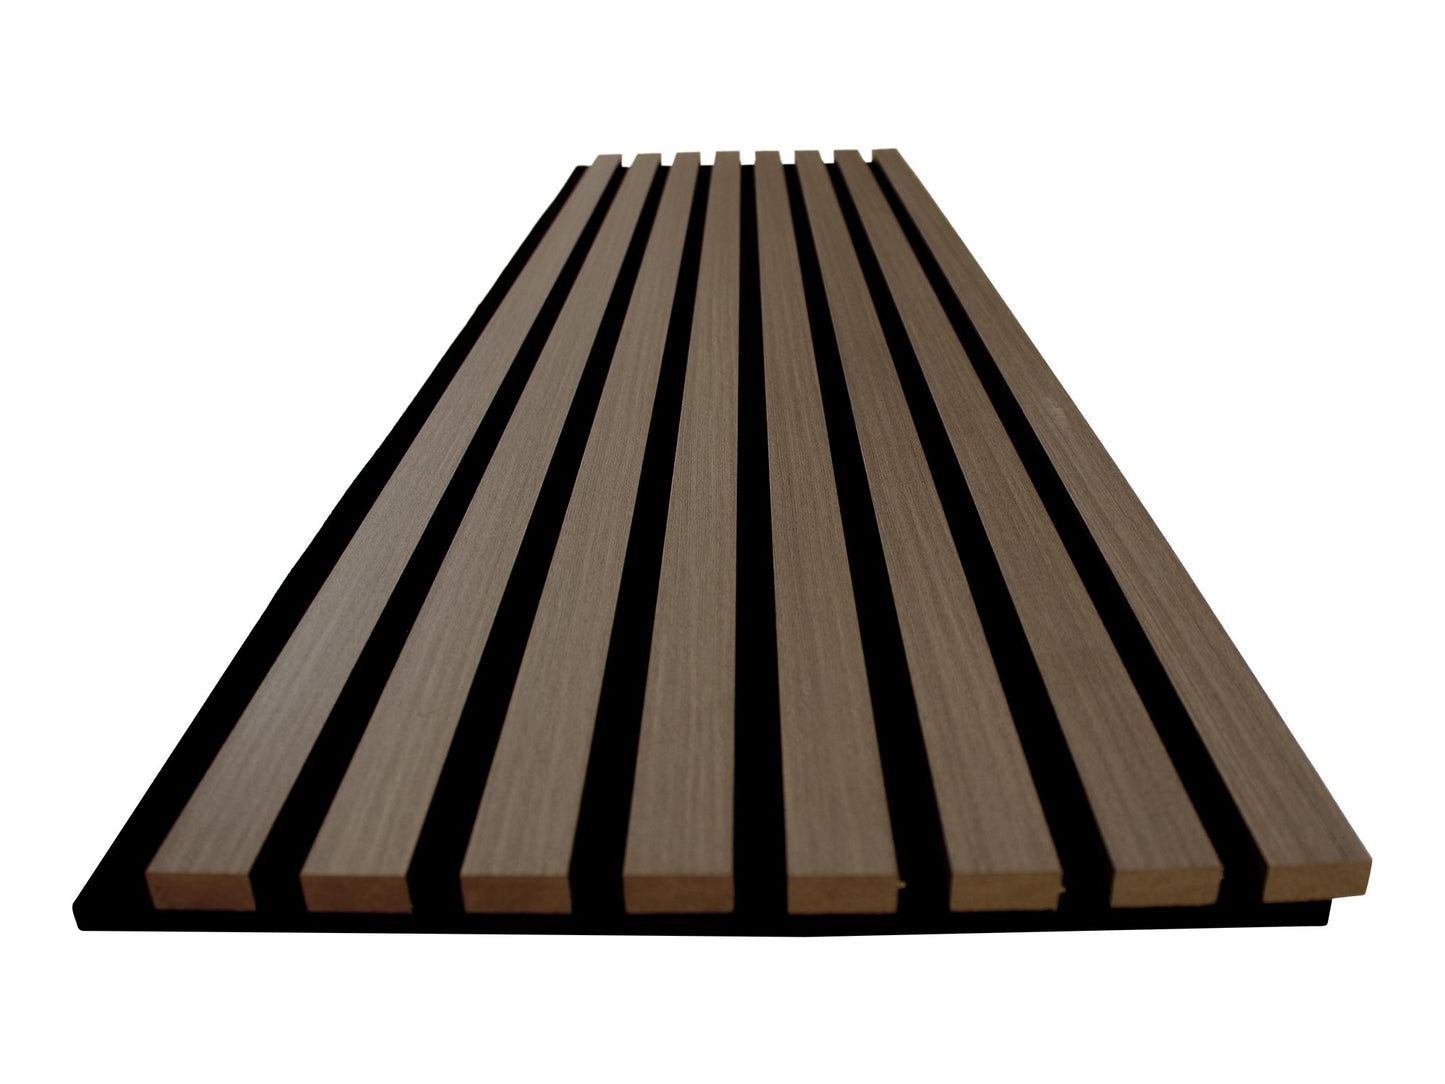 Mocha Brown Slat Wood Paneling for Soundproofing Walls